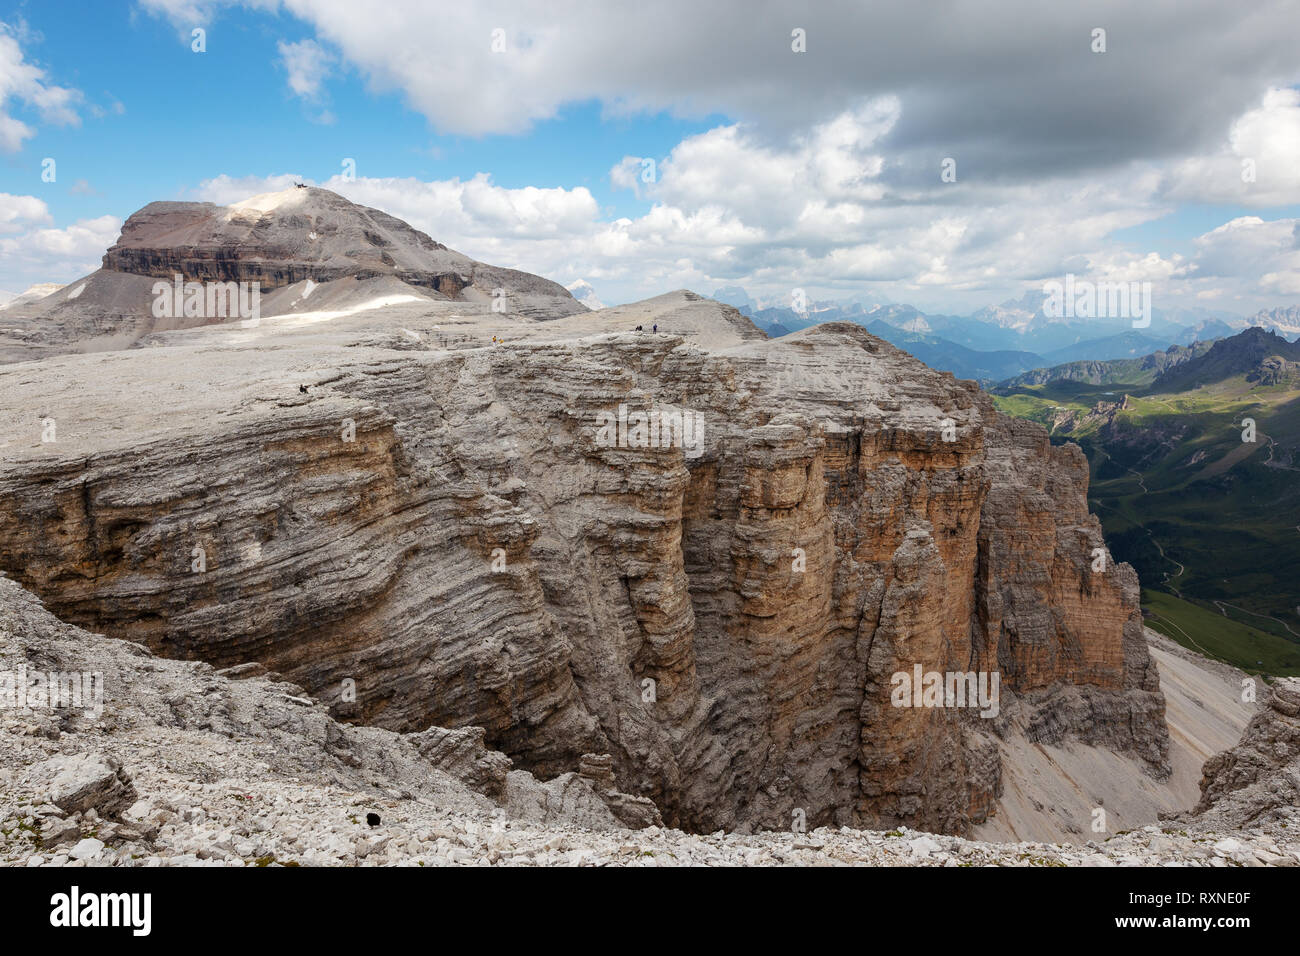 The Sella mountain group. Geological aspects of sedimentary rocks and karst. View on Piz Boè peak. The Dolomites. Italian Alps. Europe. Stock Photo